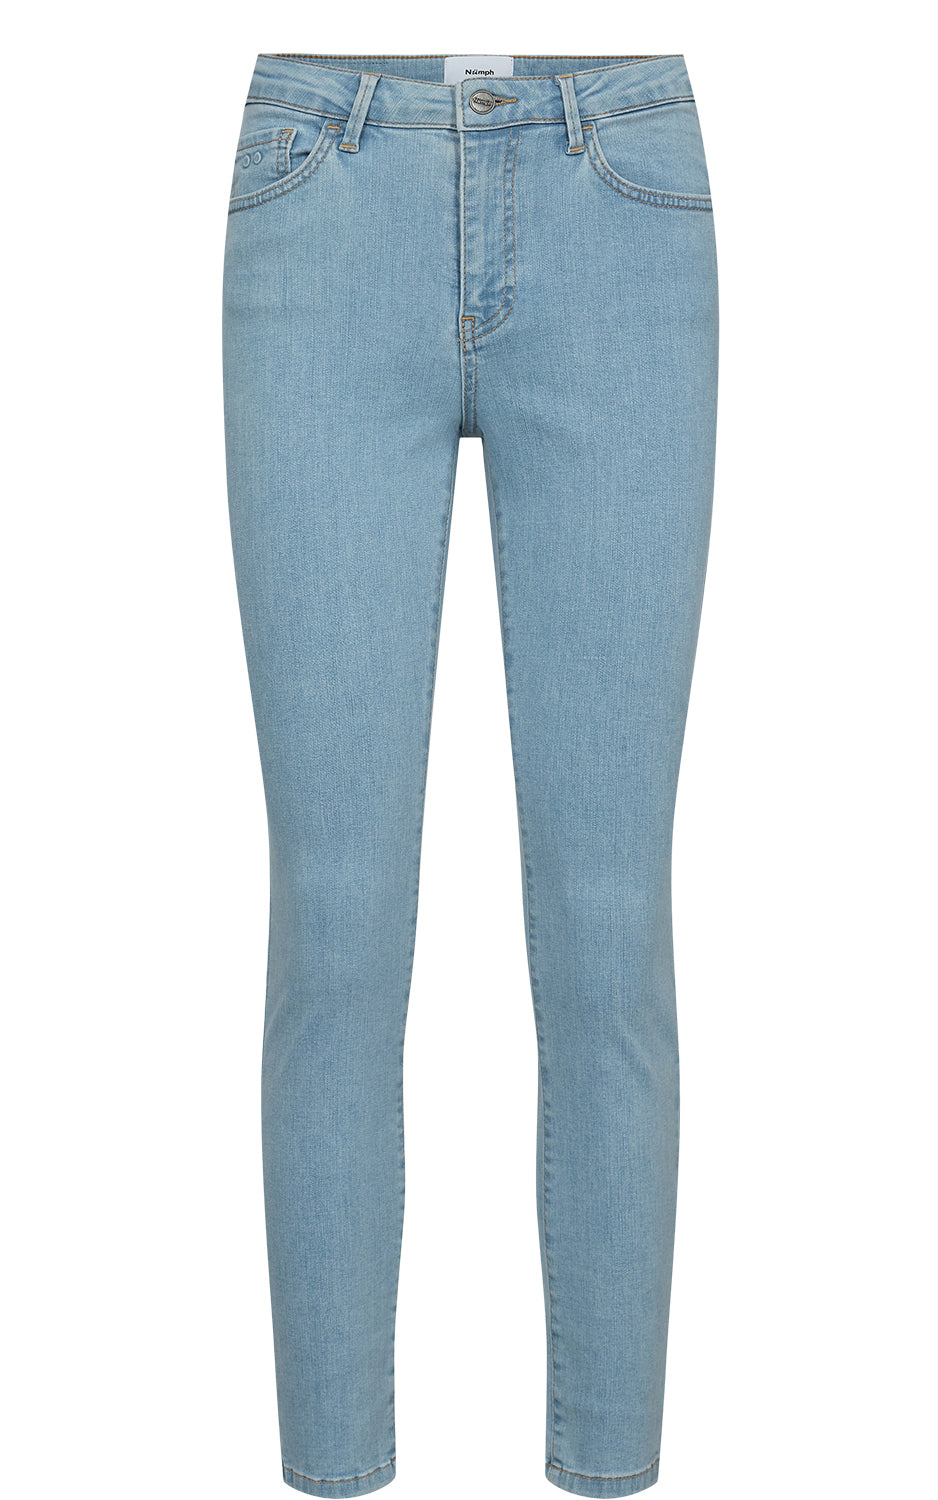 Nusidney Cropped Jeans Light Blue Denim